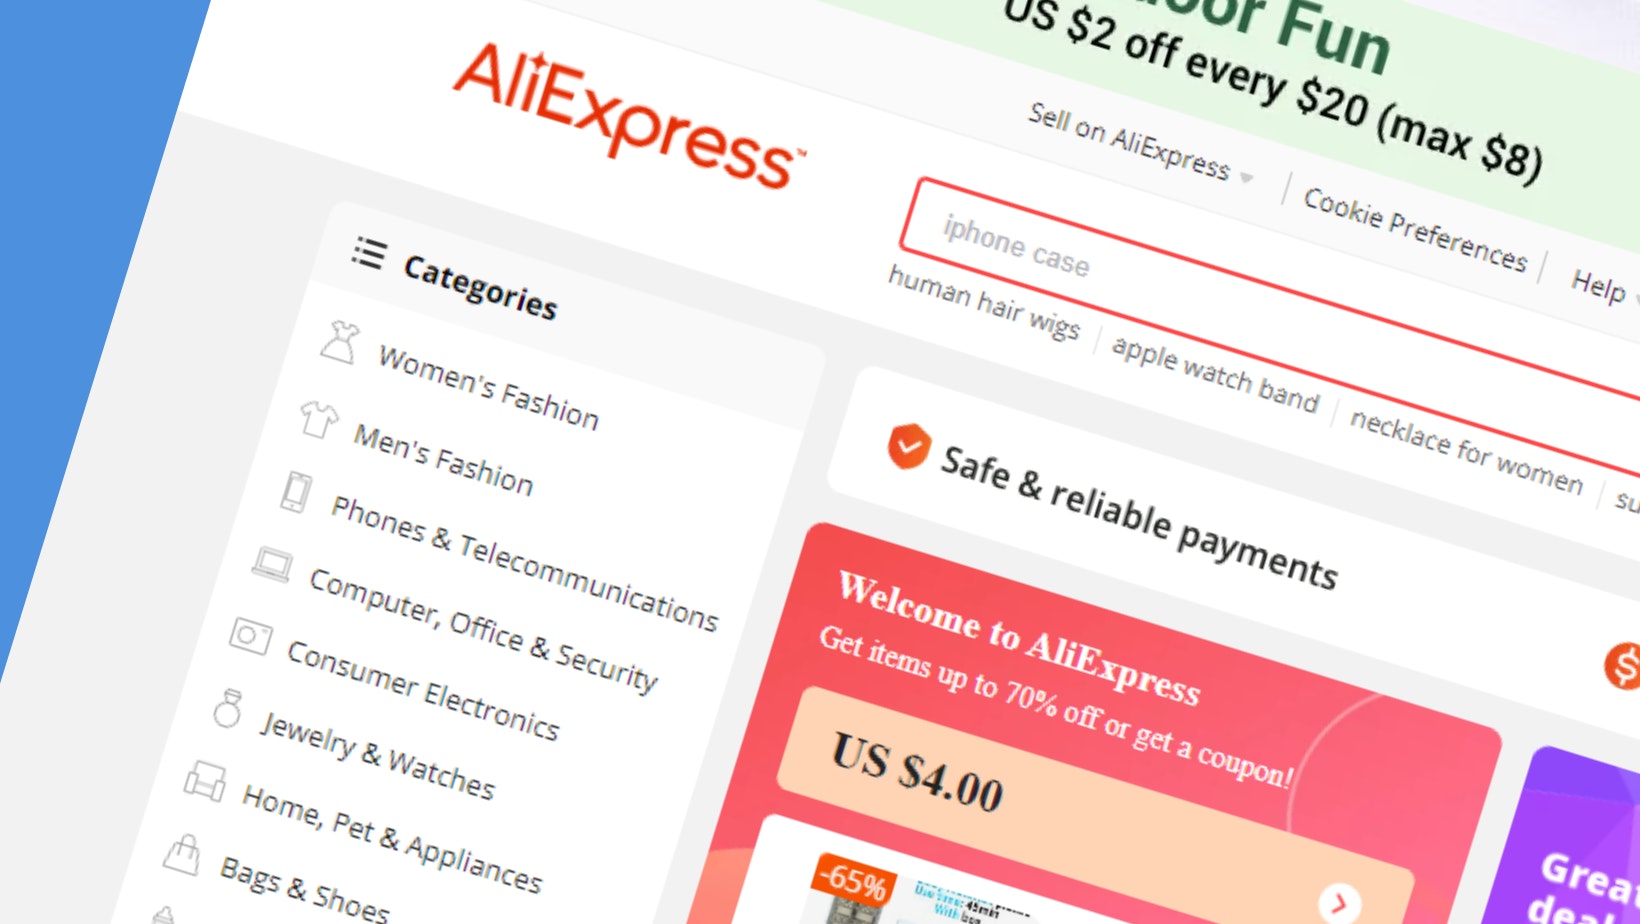 Screen capture of the AliExpress website.